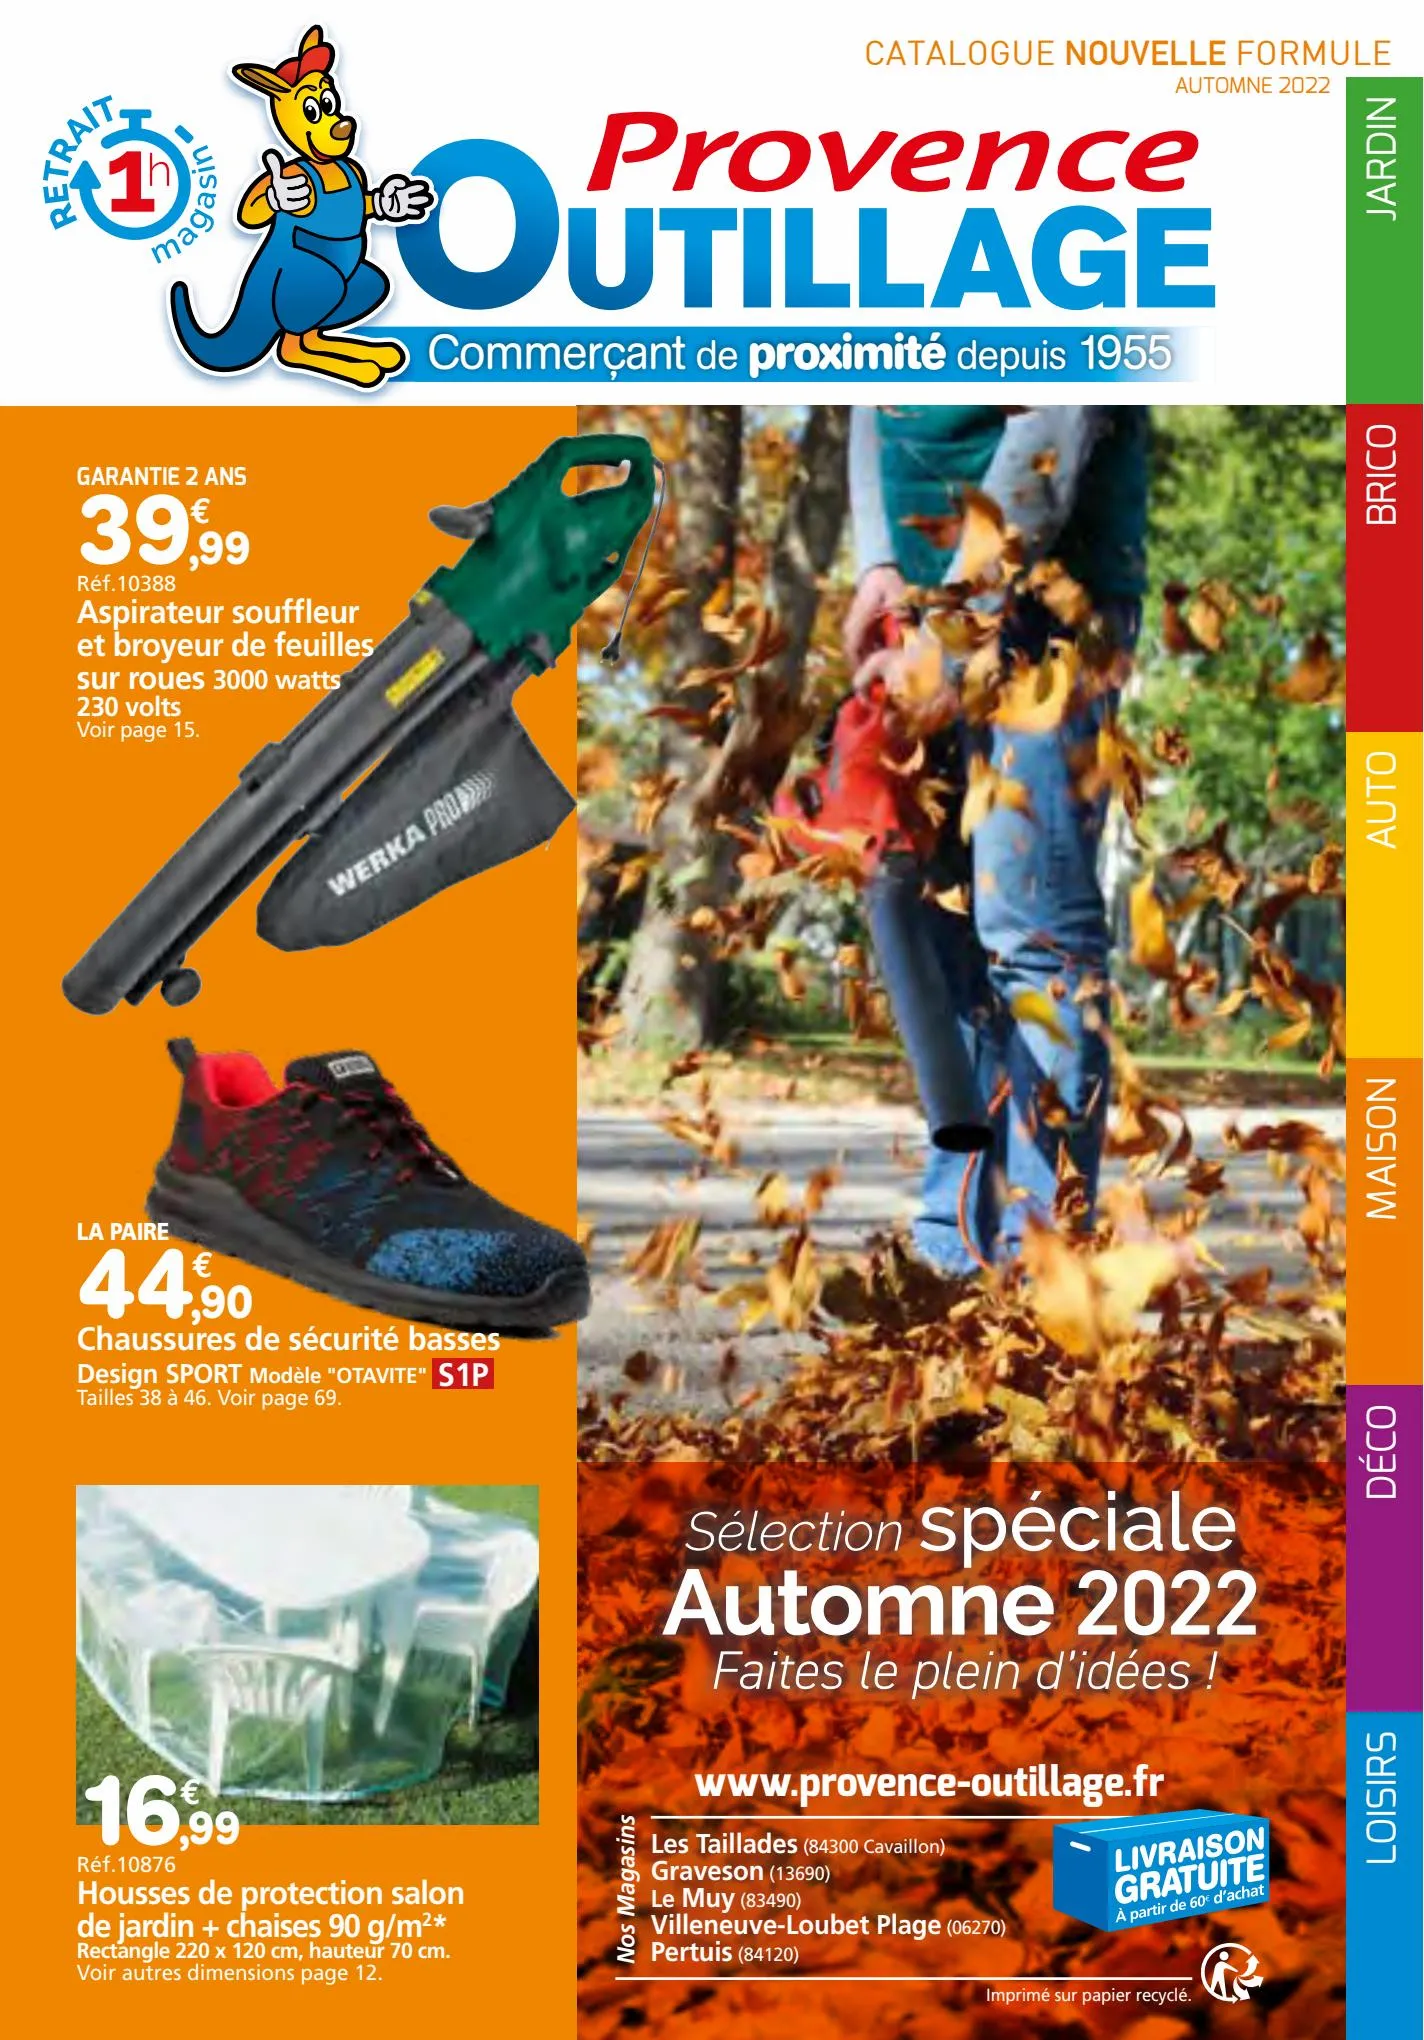 Catalogue Automne 2022, page 00001